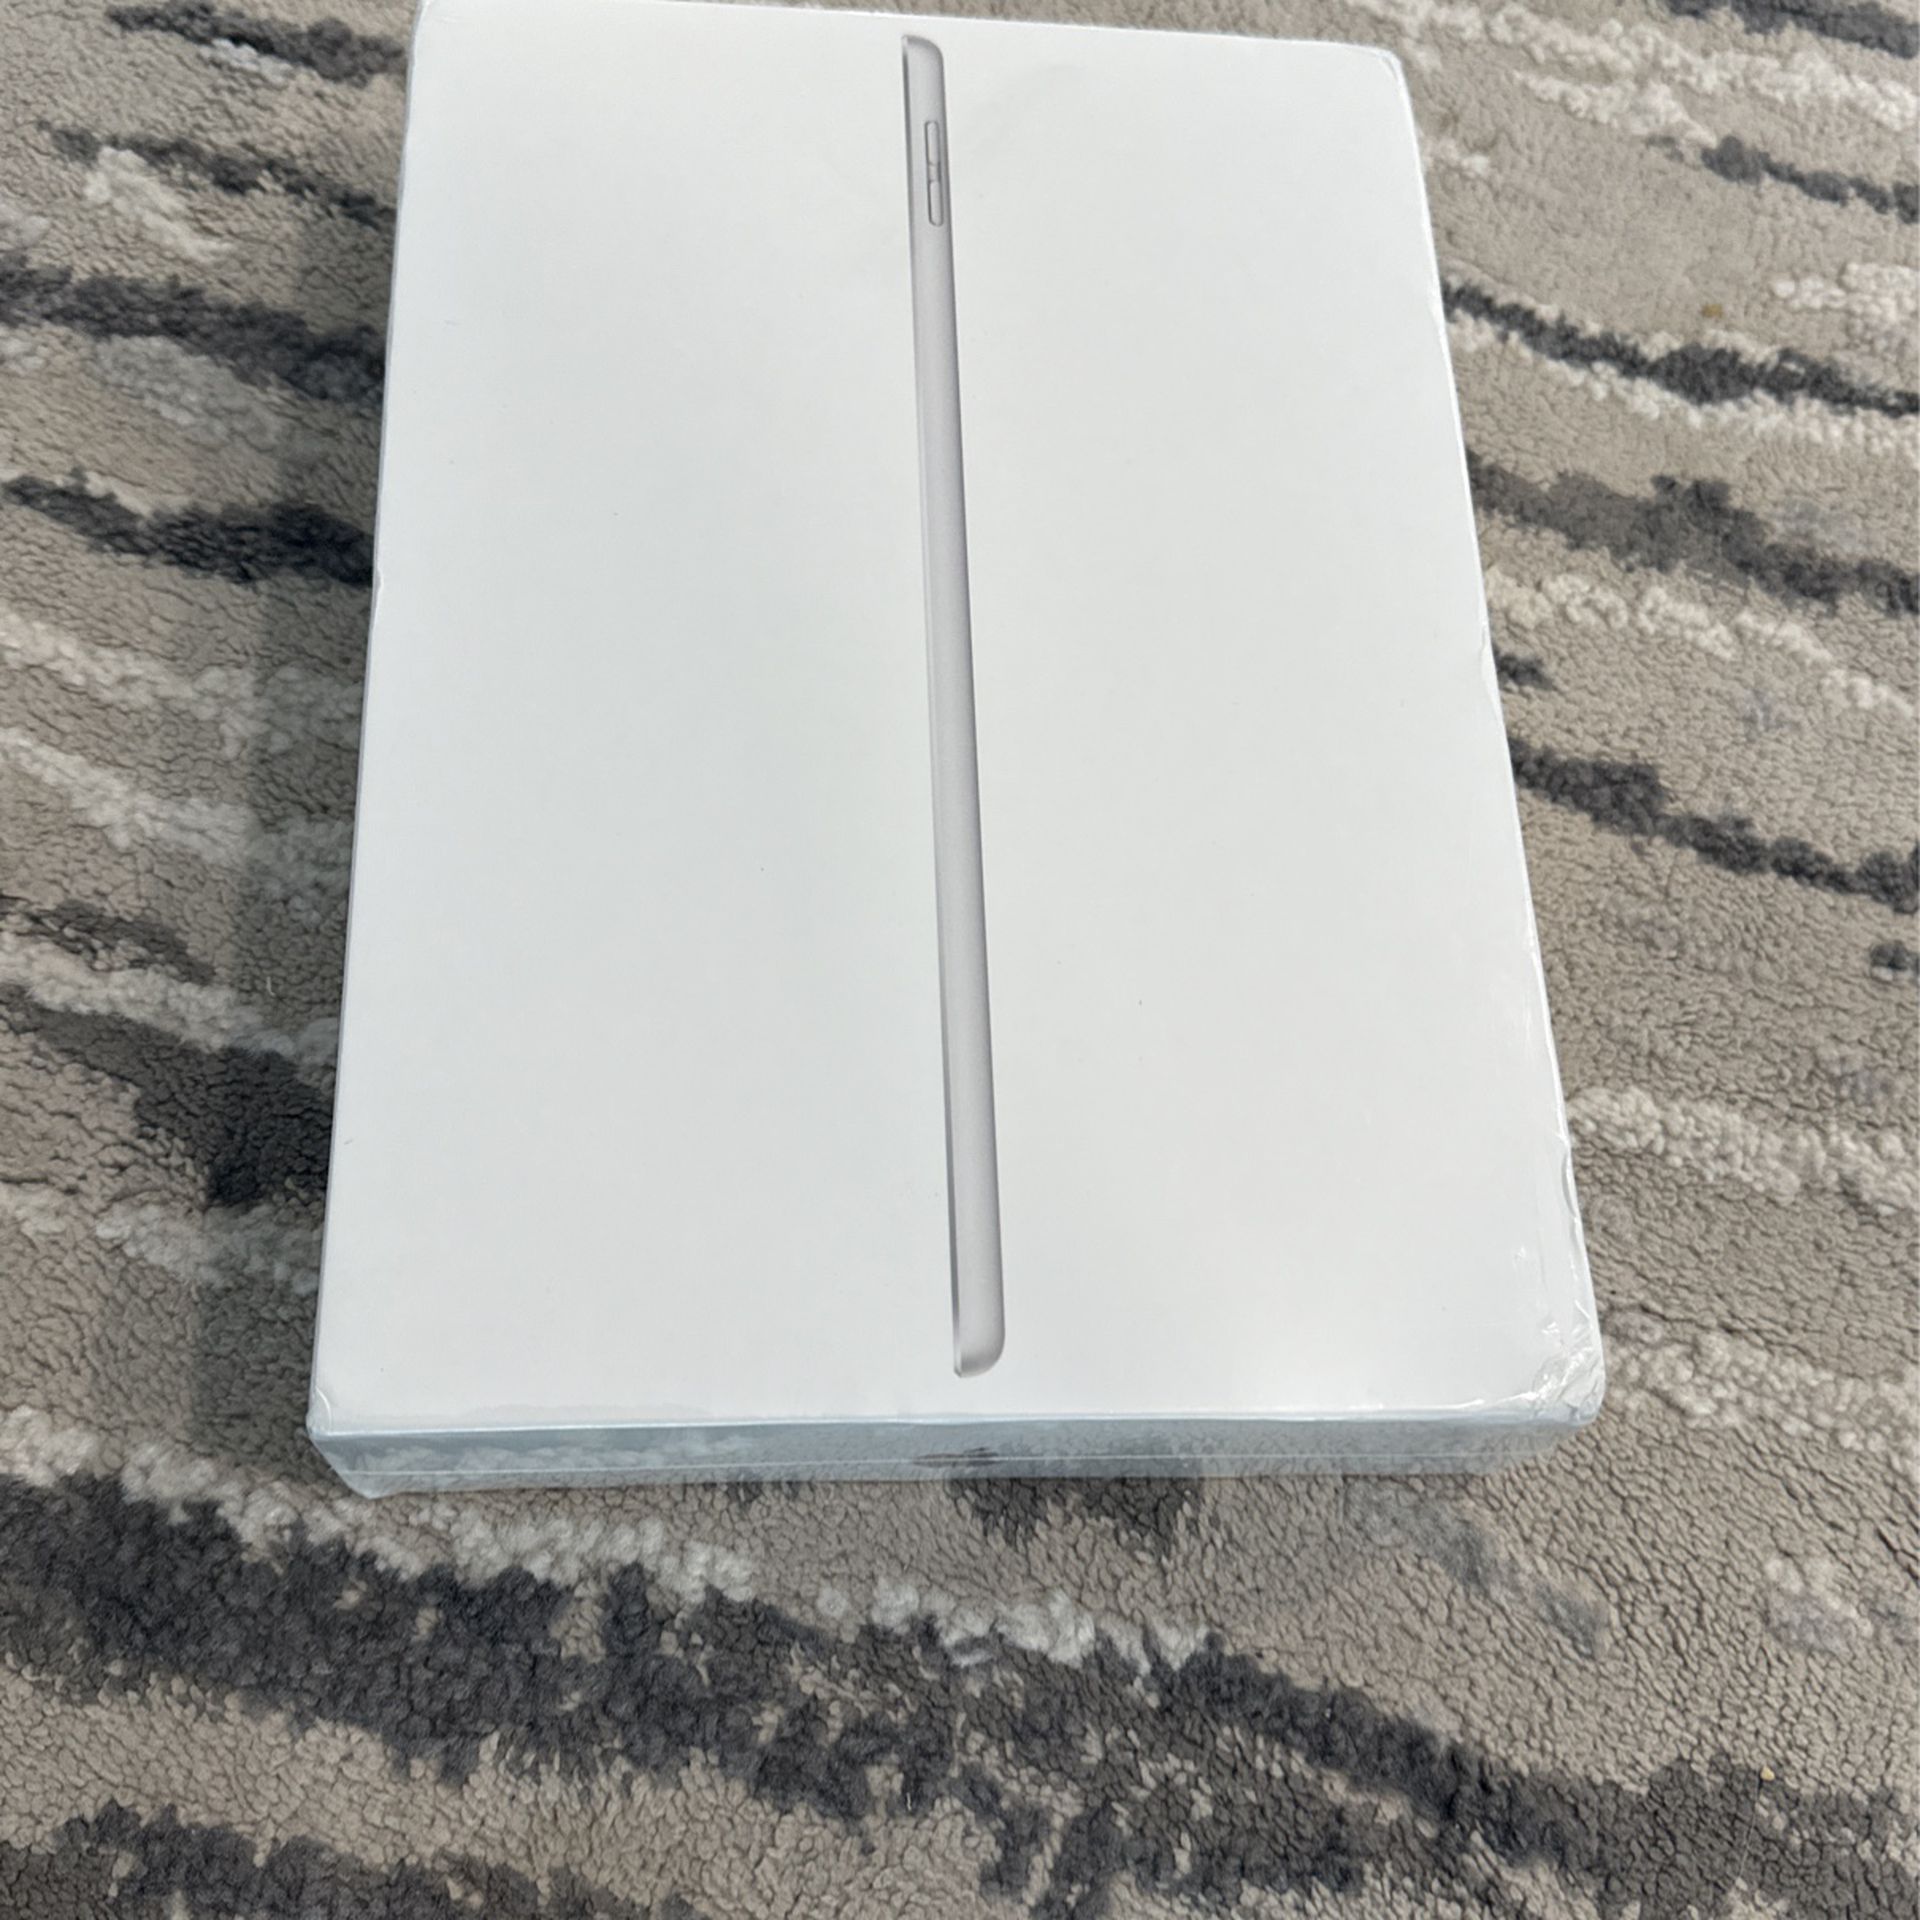 Brand New iPad 9 (64GB, Silver) - Sealed Box, Unopened!